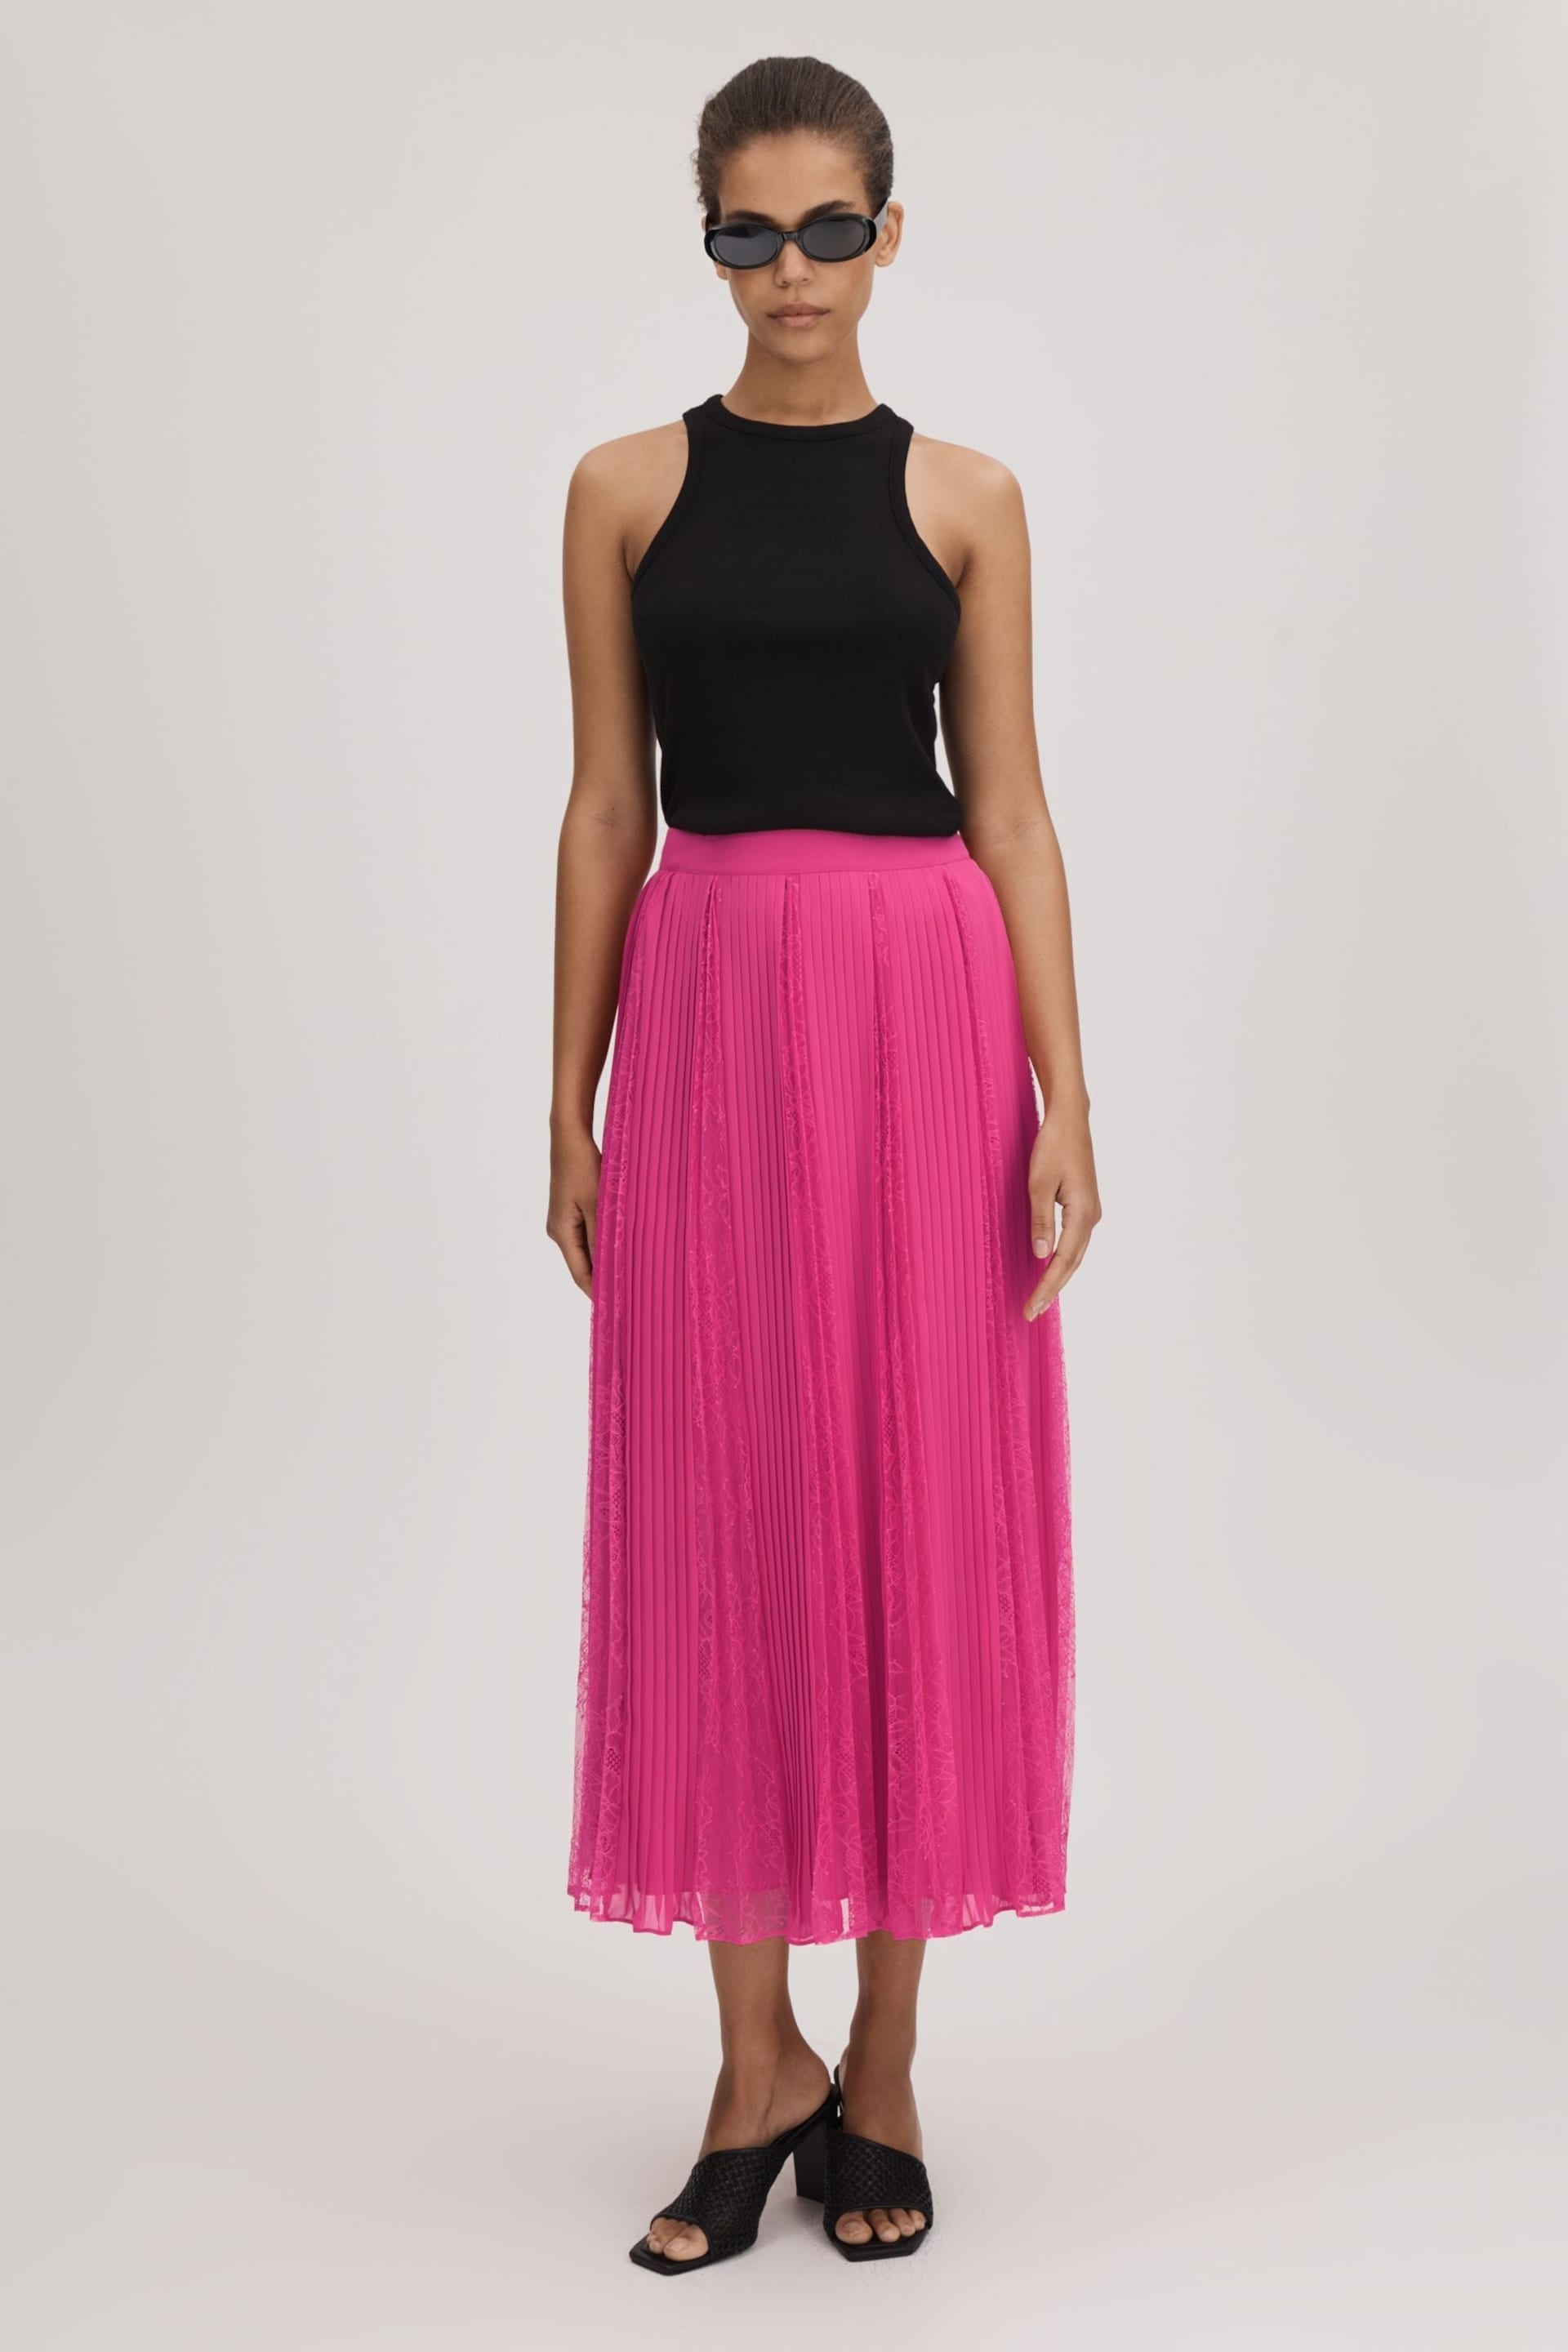 Florere Lace Pleated Midi Skirt - Image 3 of 6